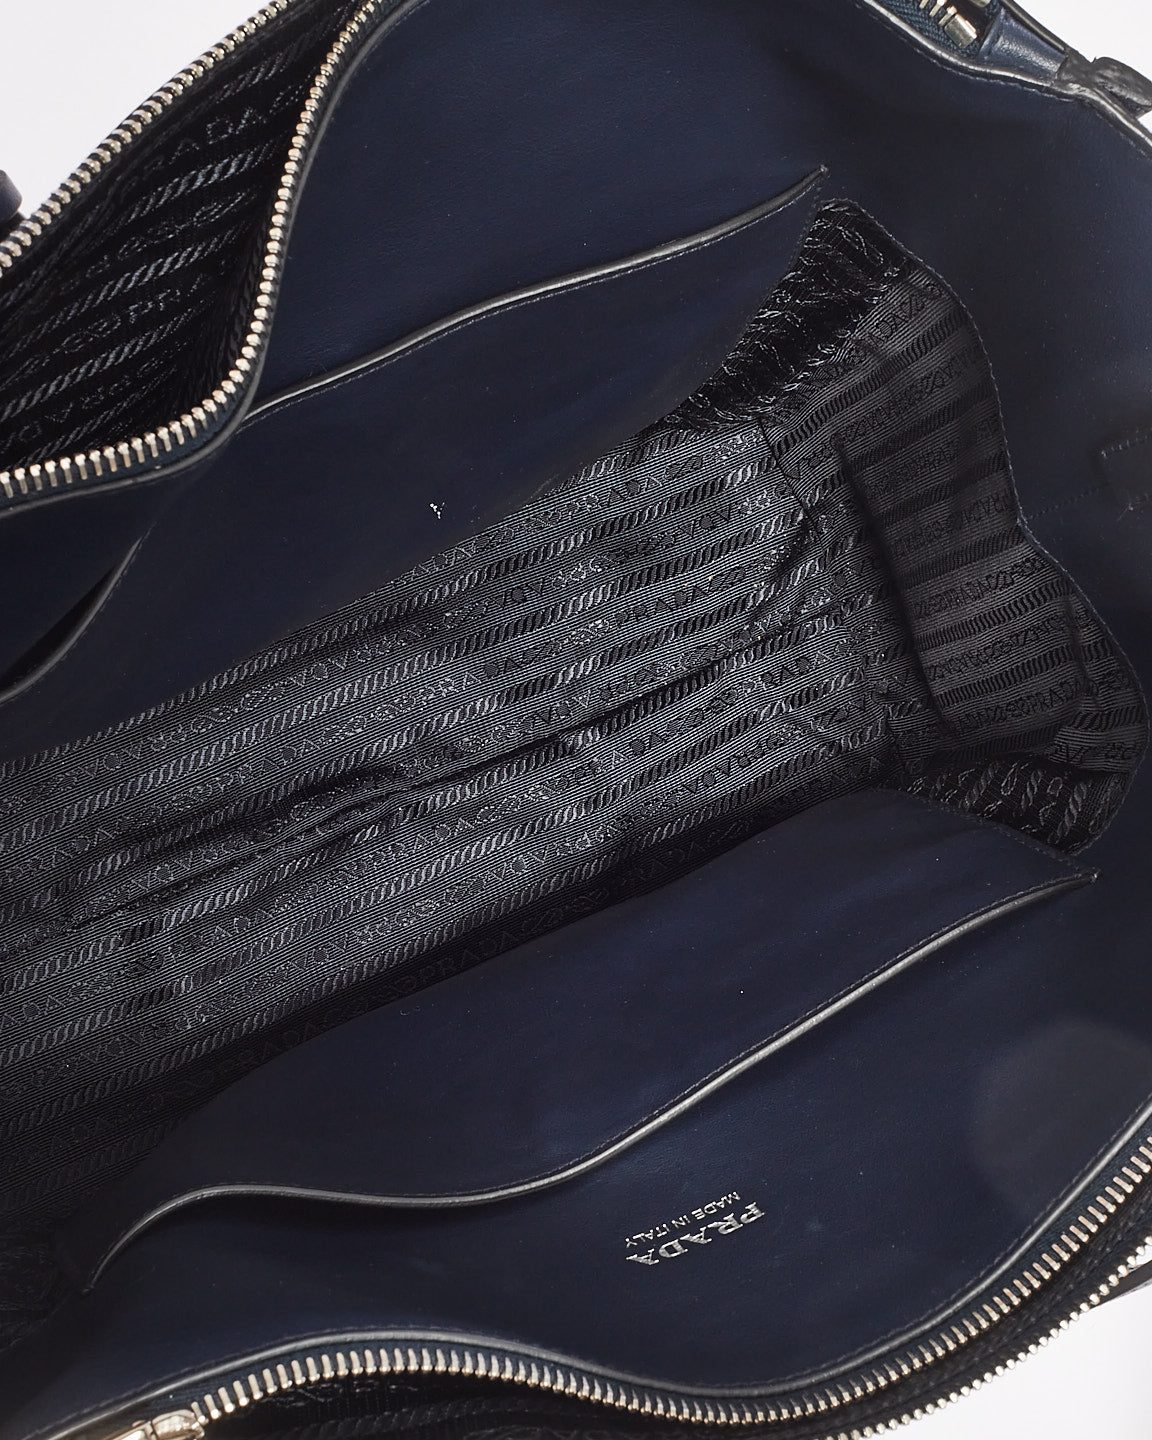 Prada Navy Blue Leather Medium Grace Concept Tote